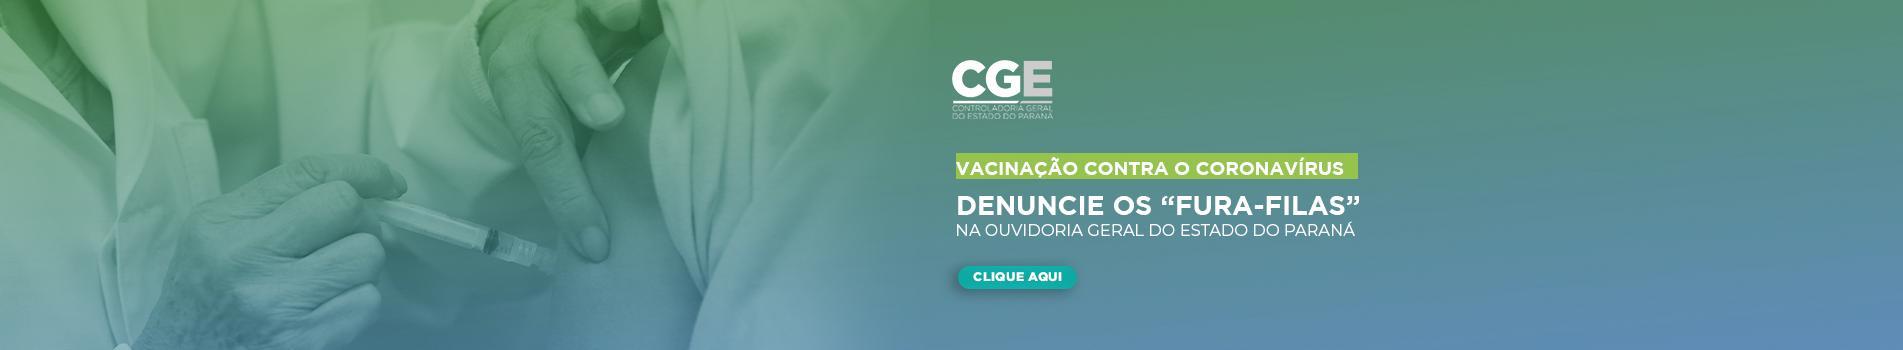 CGE passa a receber denúncias de fura-filas da vacina